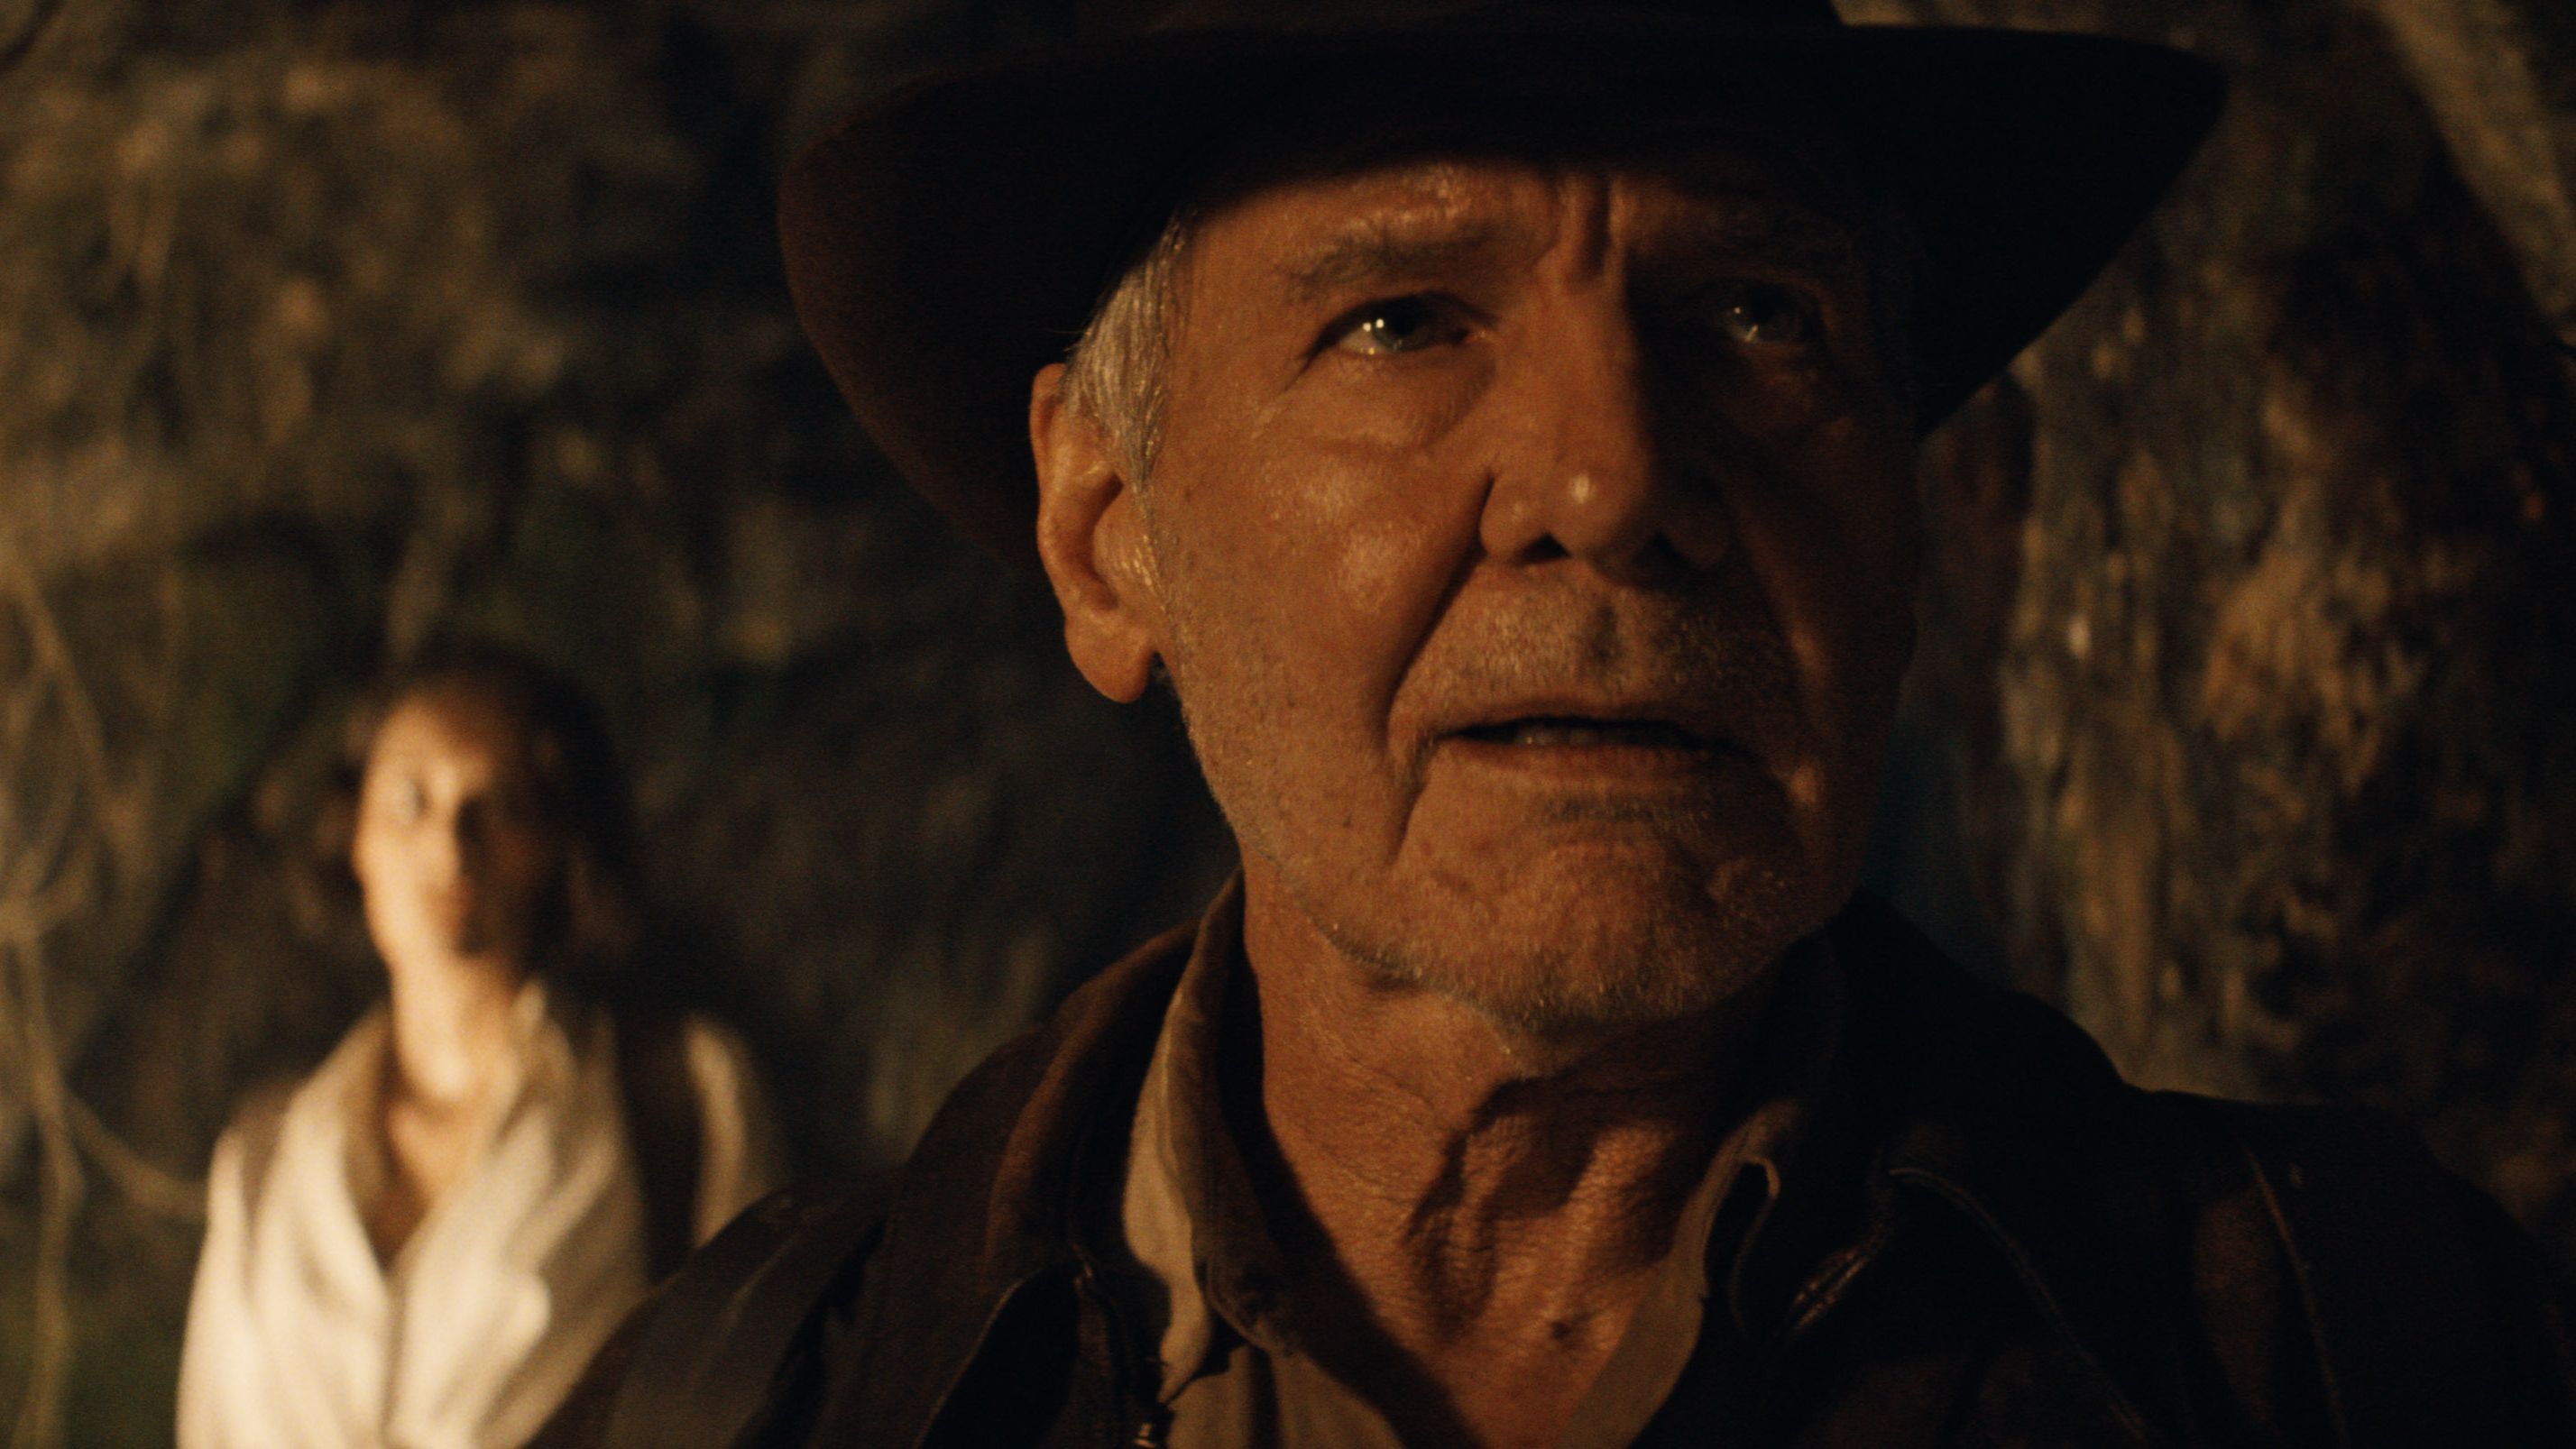 Indiana Jones 5' Ending, Explained: What Happened?